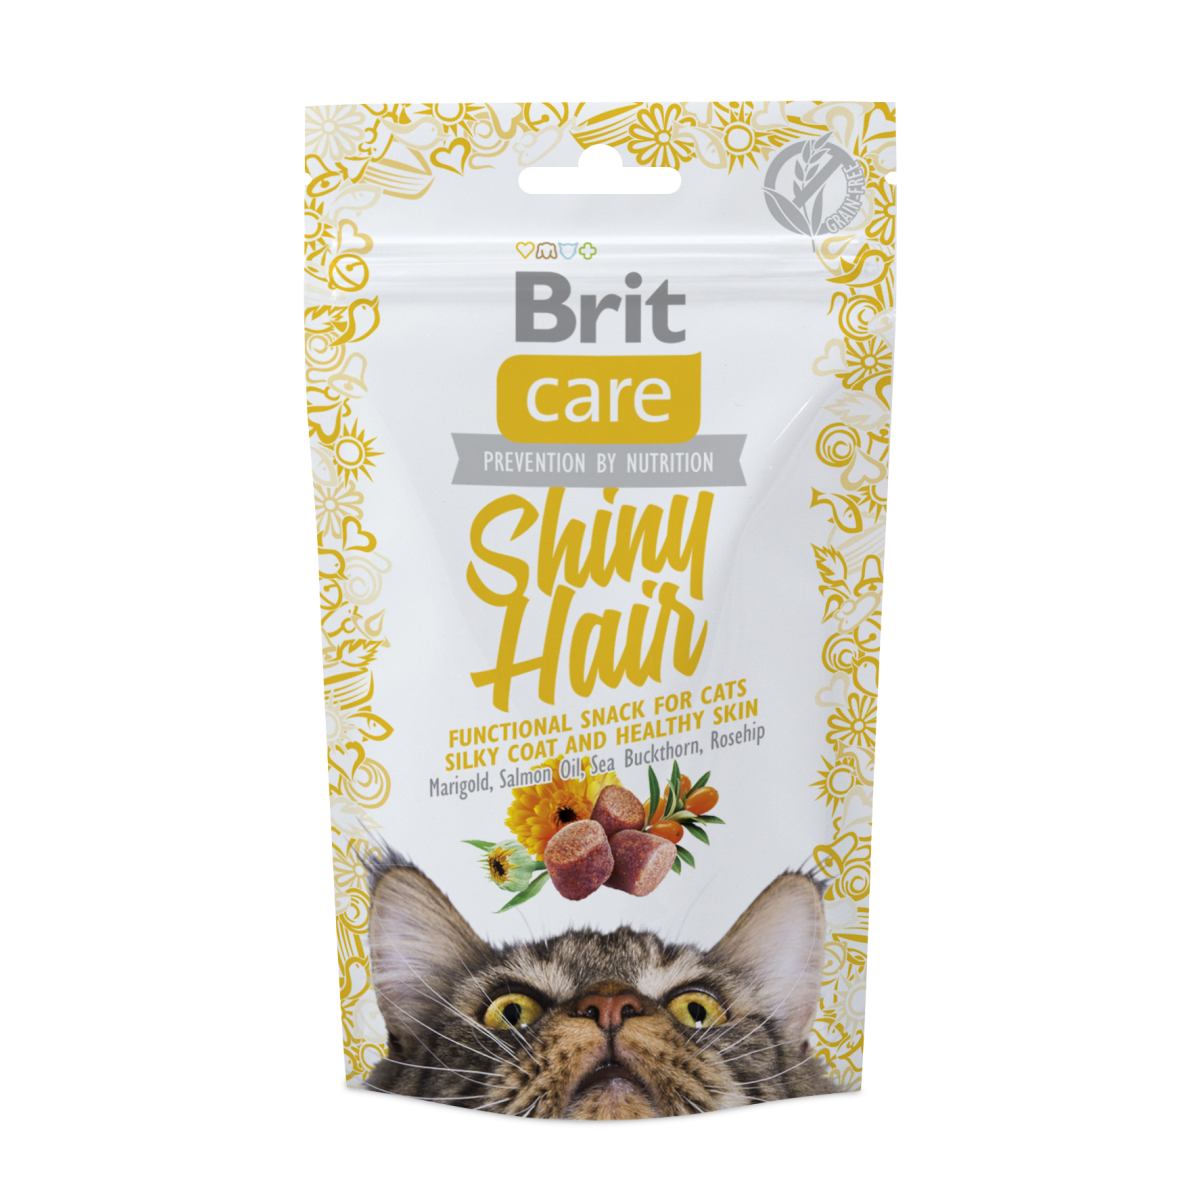 Лакомство для кошек Brit Care Functional Snack Shiny Hair 50 г, для кожи и шерсти